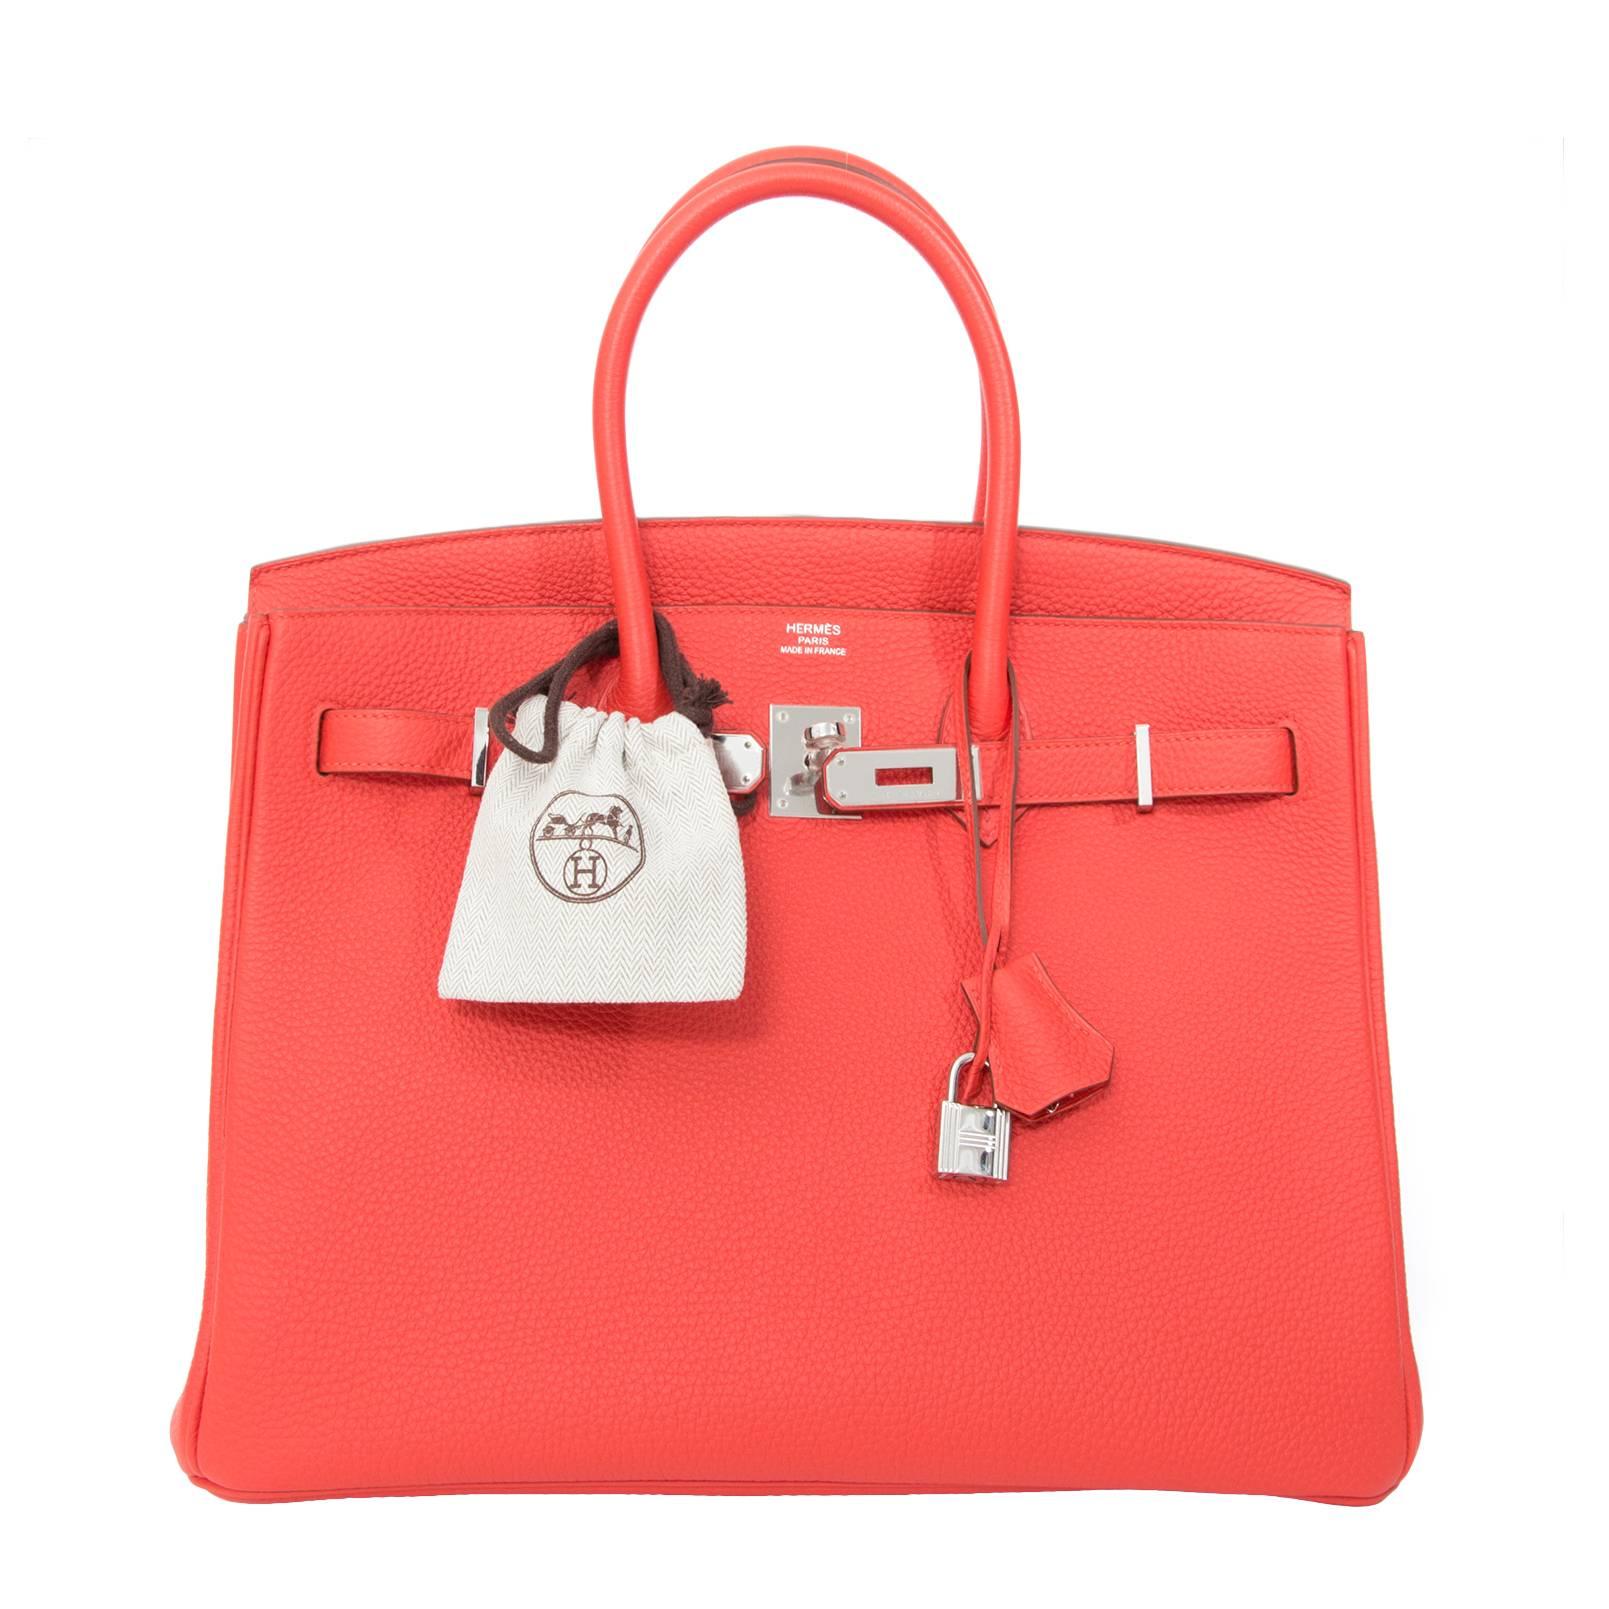 BRAND NEW Hermès Birkin Bag Togo Capucine PHW 35cm 